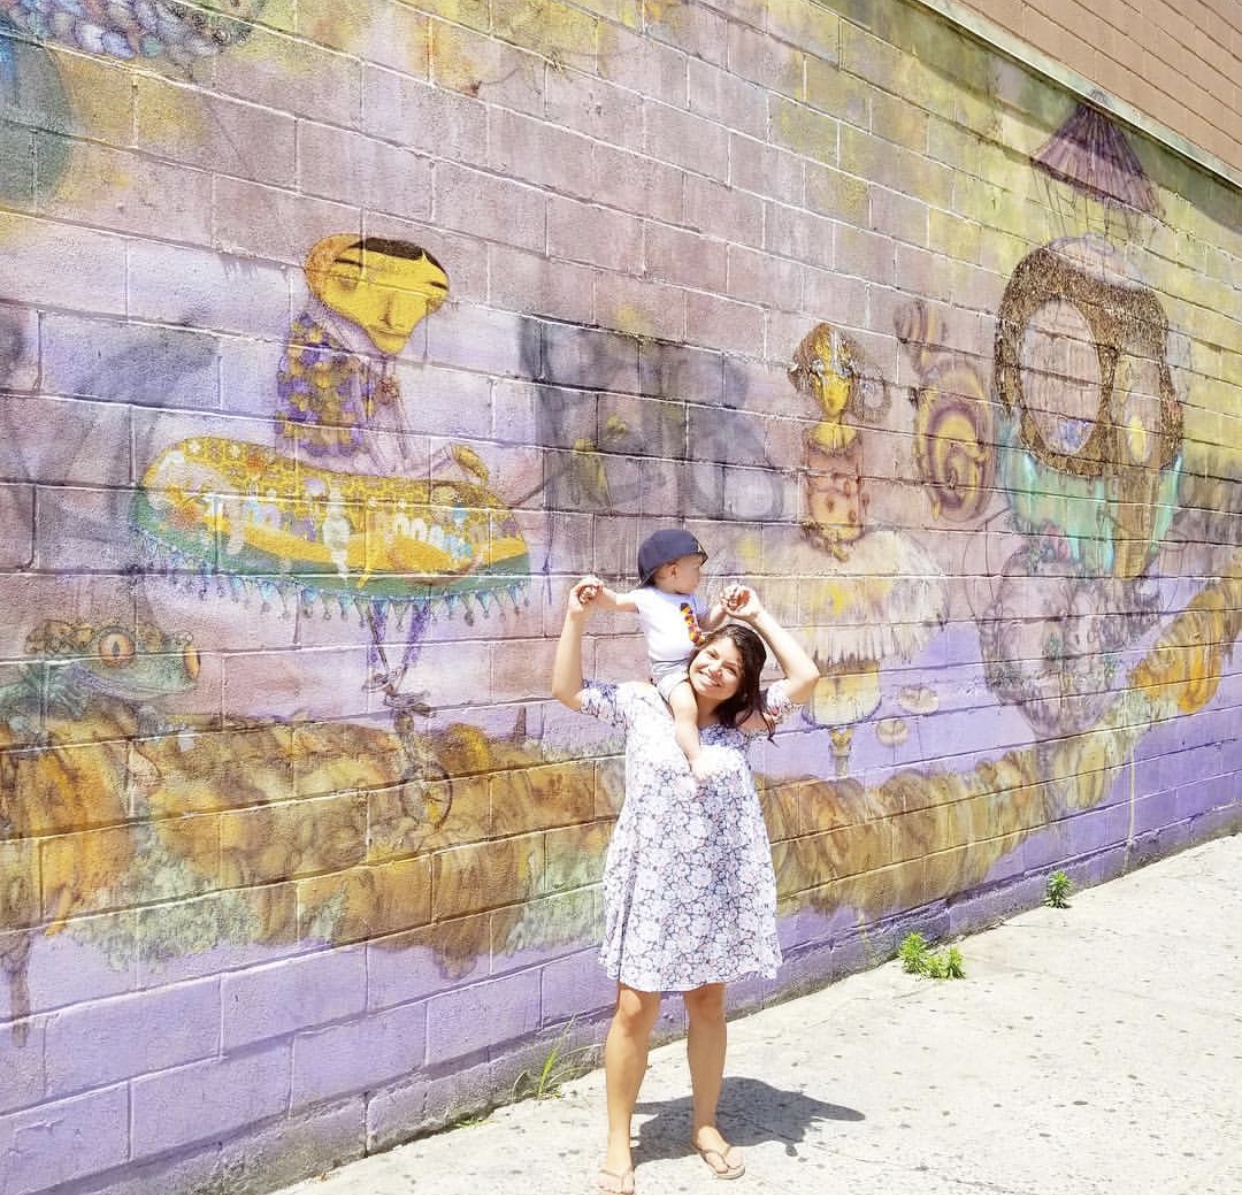 Kiwi S Angels Brooklyn Nyc Residency J Line Graffiti With